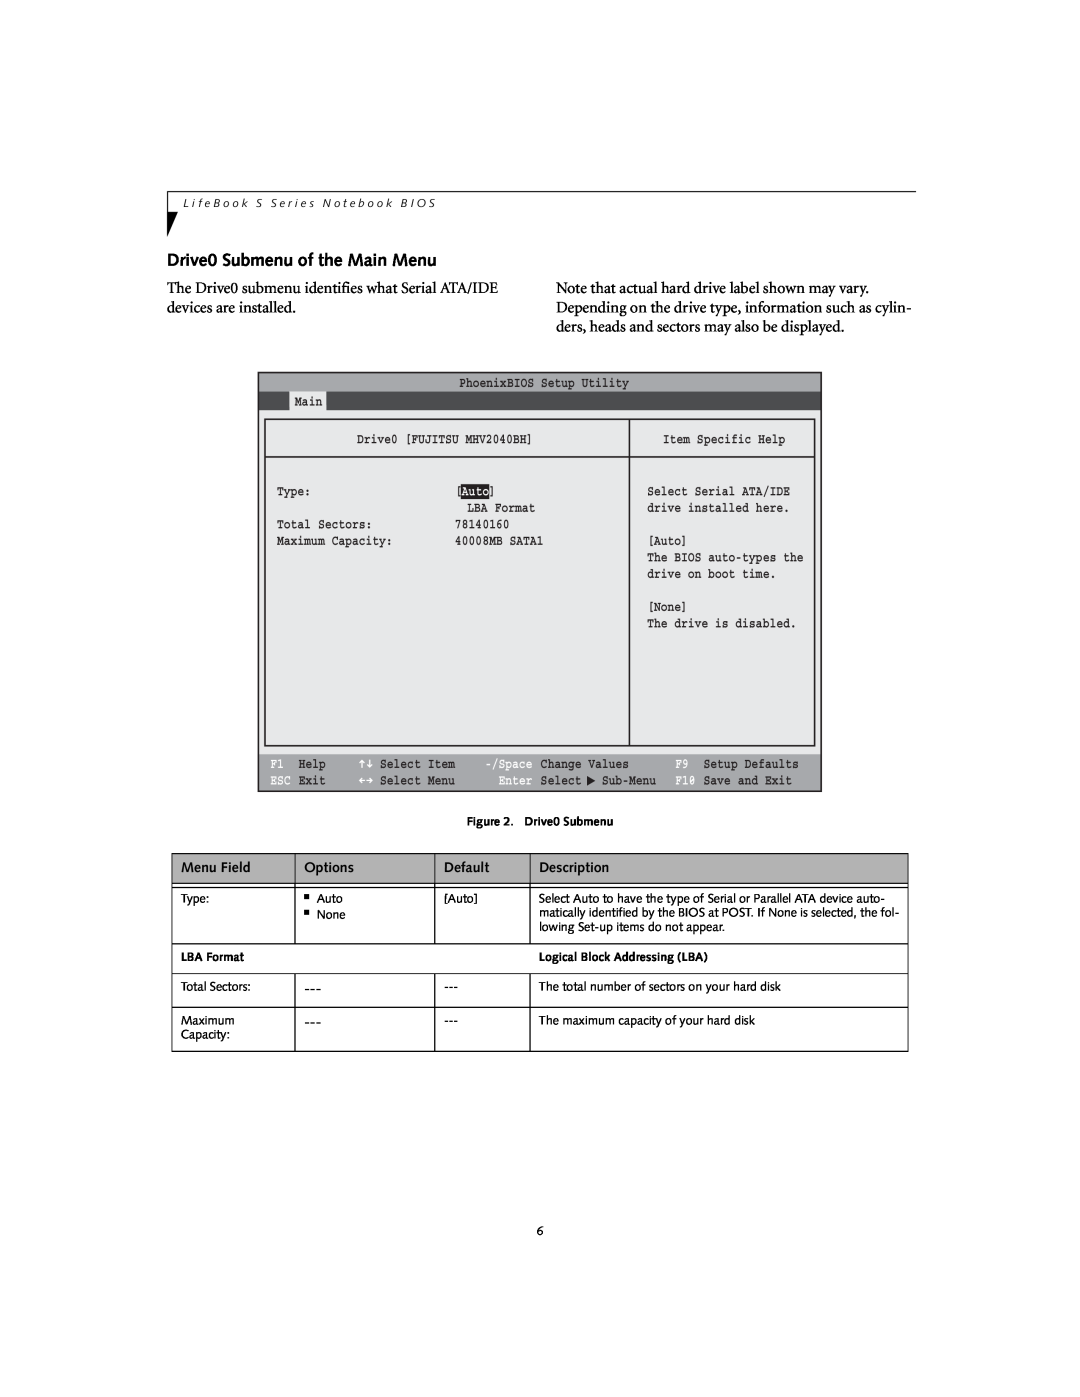 Fujitsu S7110 manual Drive0 Submenu of the Main Menu, LBA Format, Logical Block Addressing LBA 